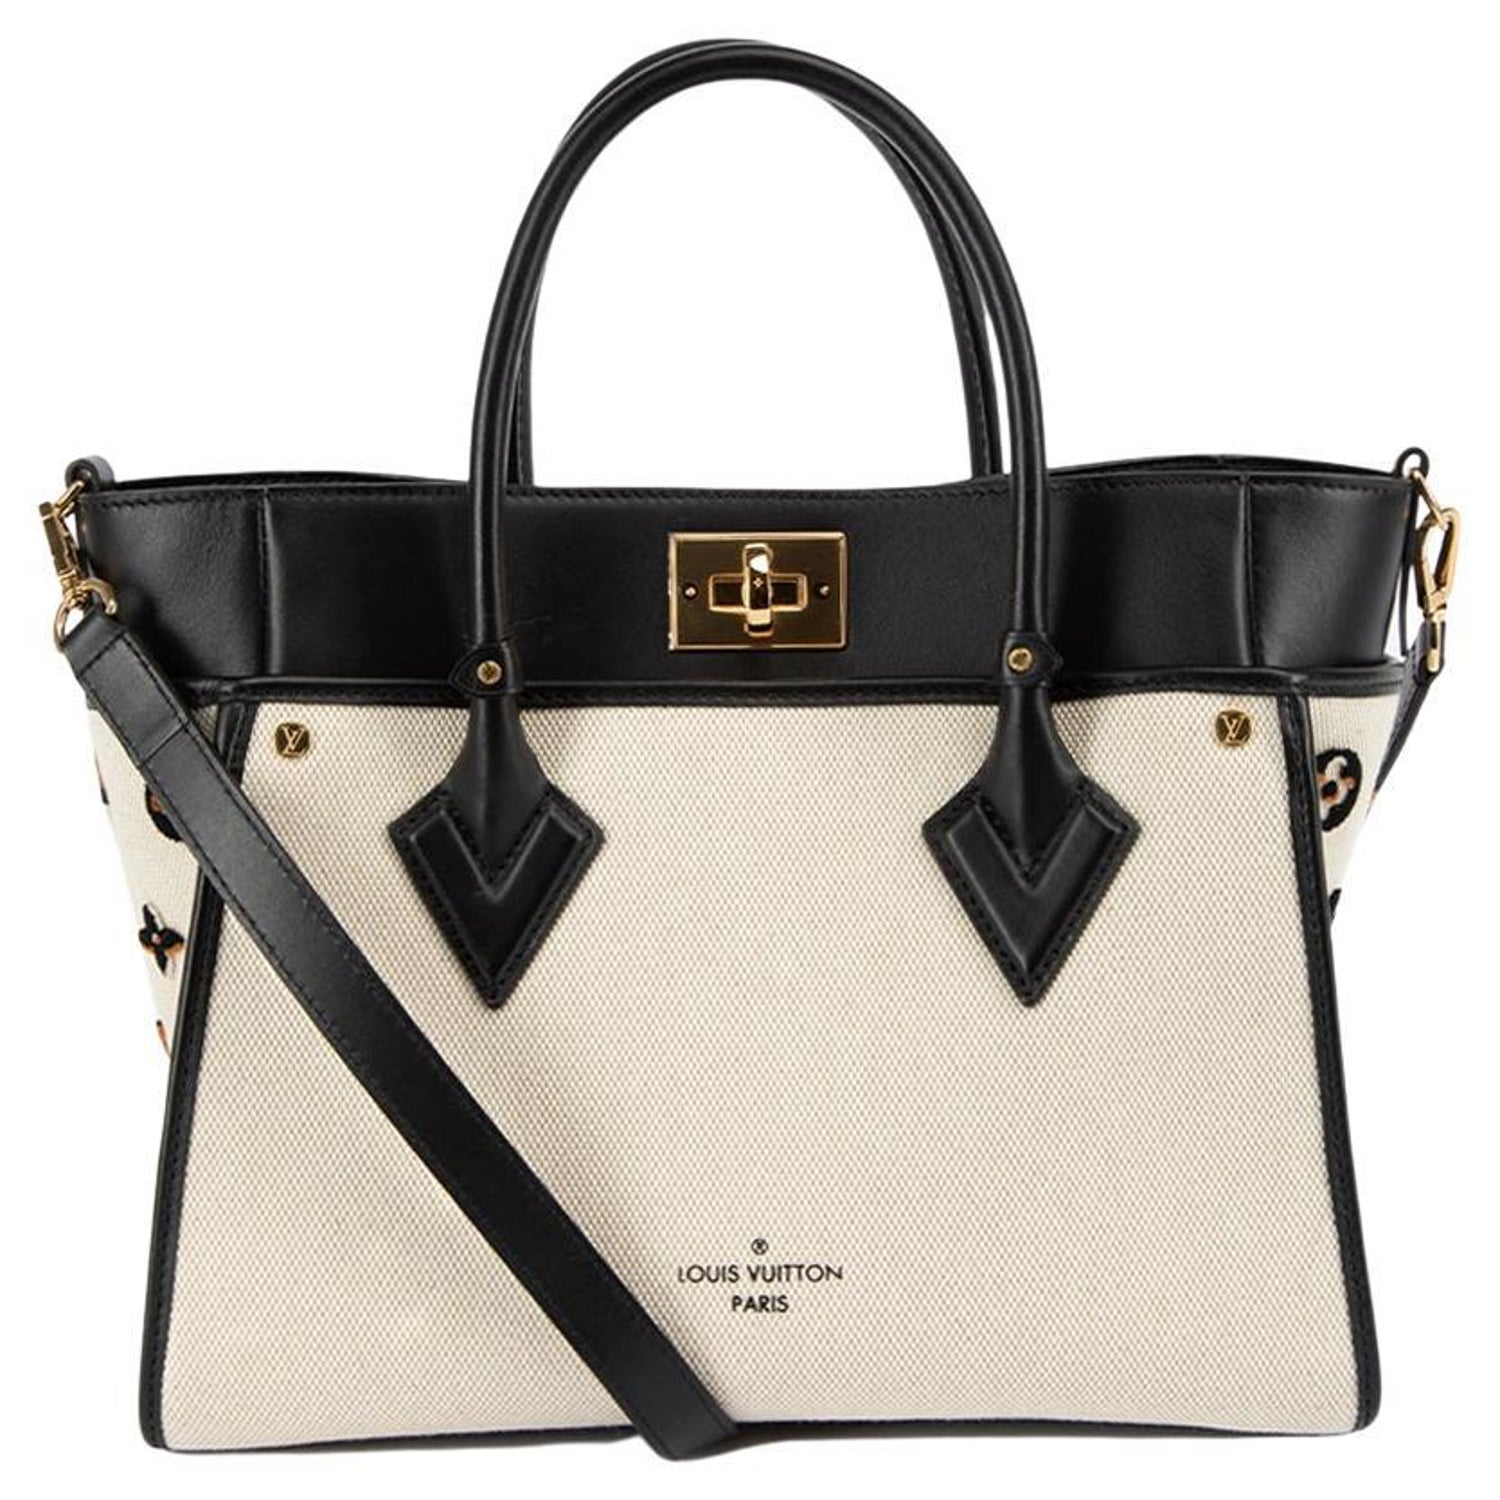 Kate Moss and Louis Vuitton Sofia Coppola Suede Bag